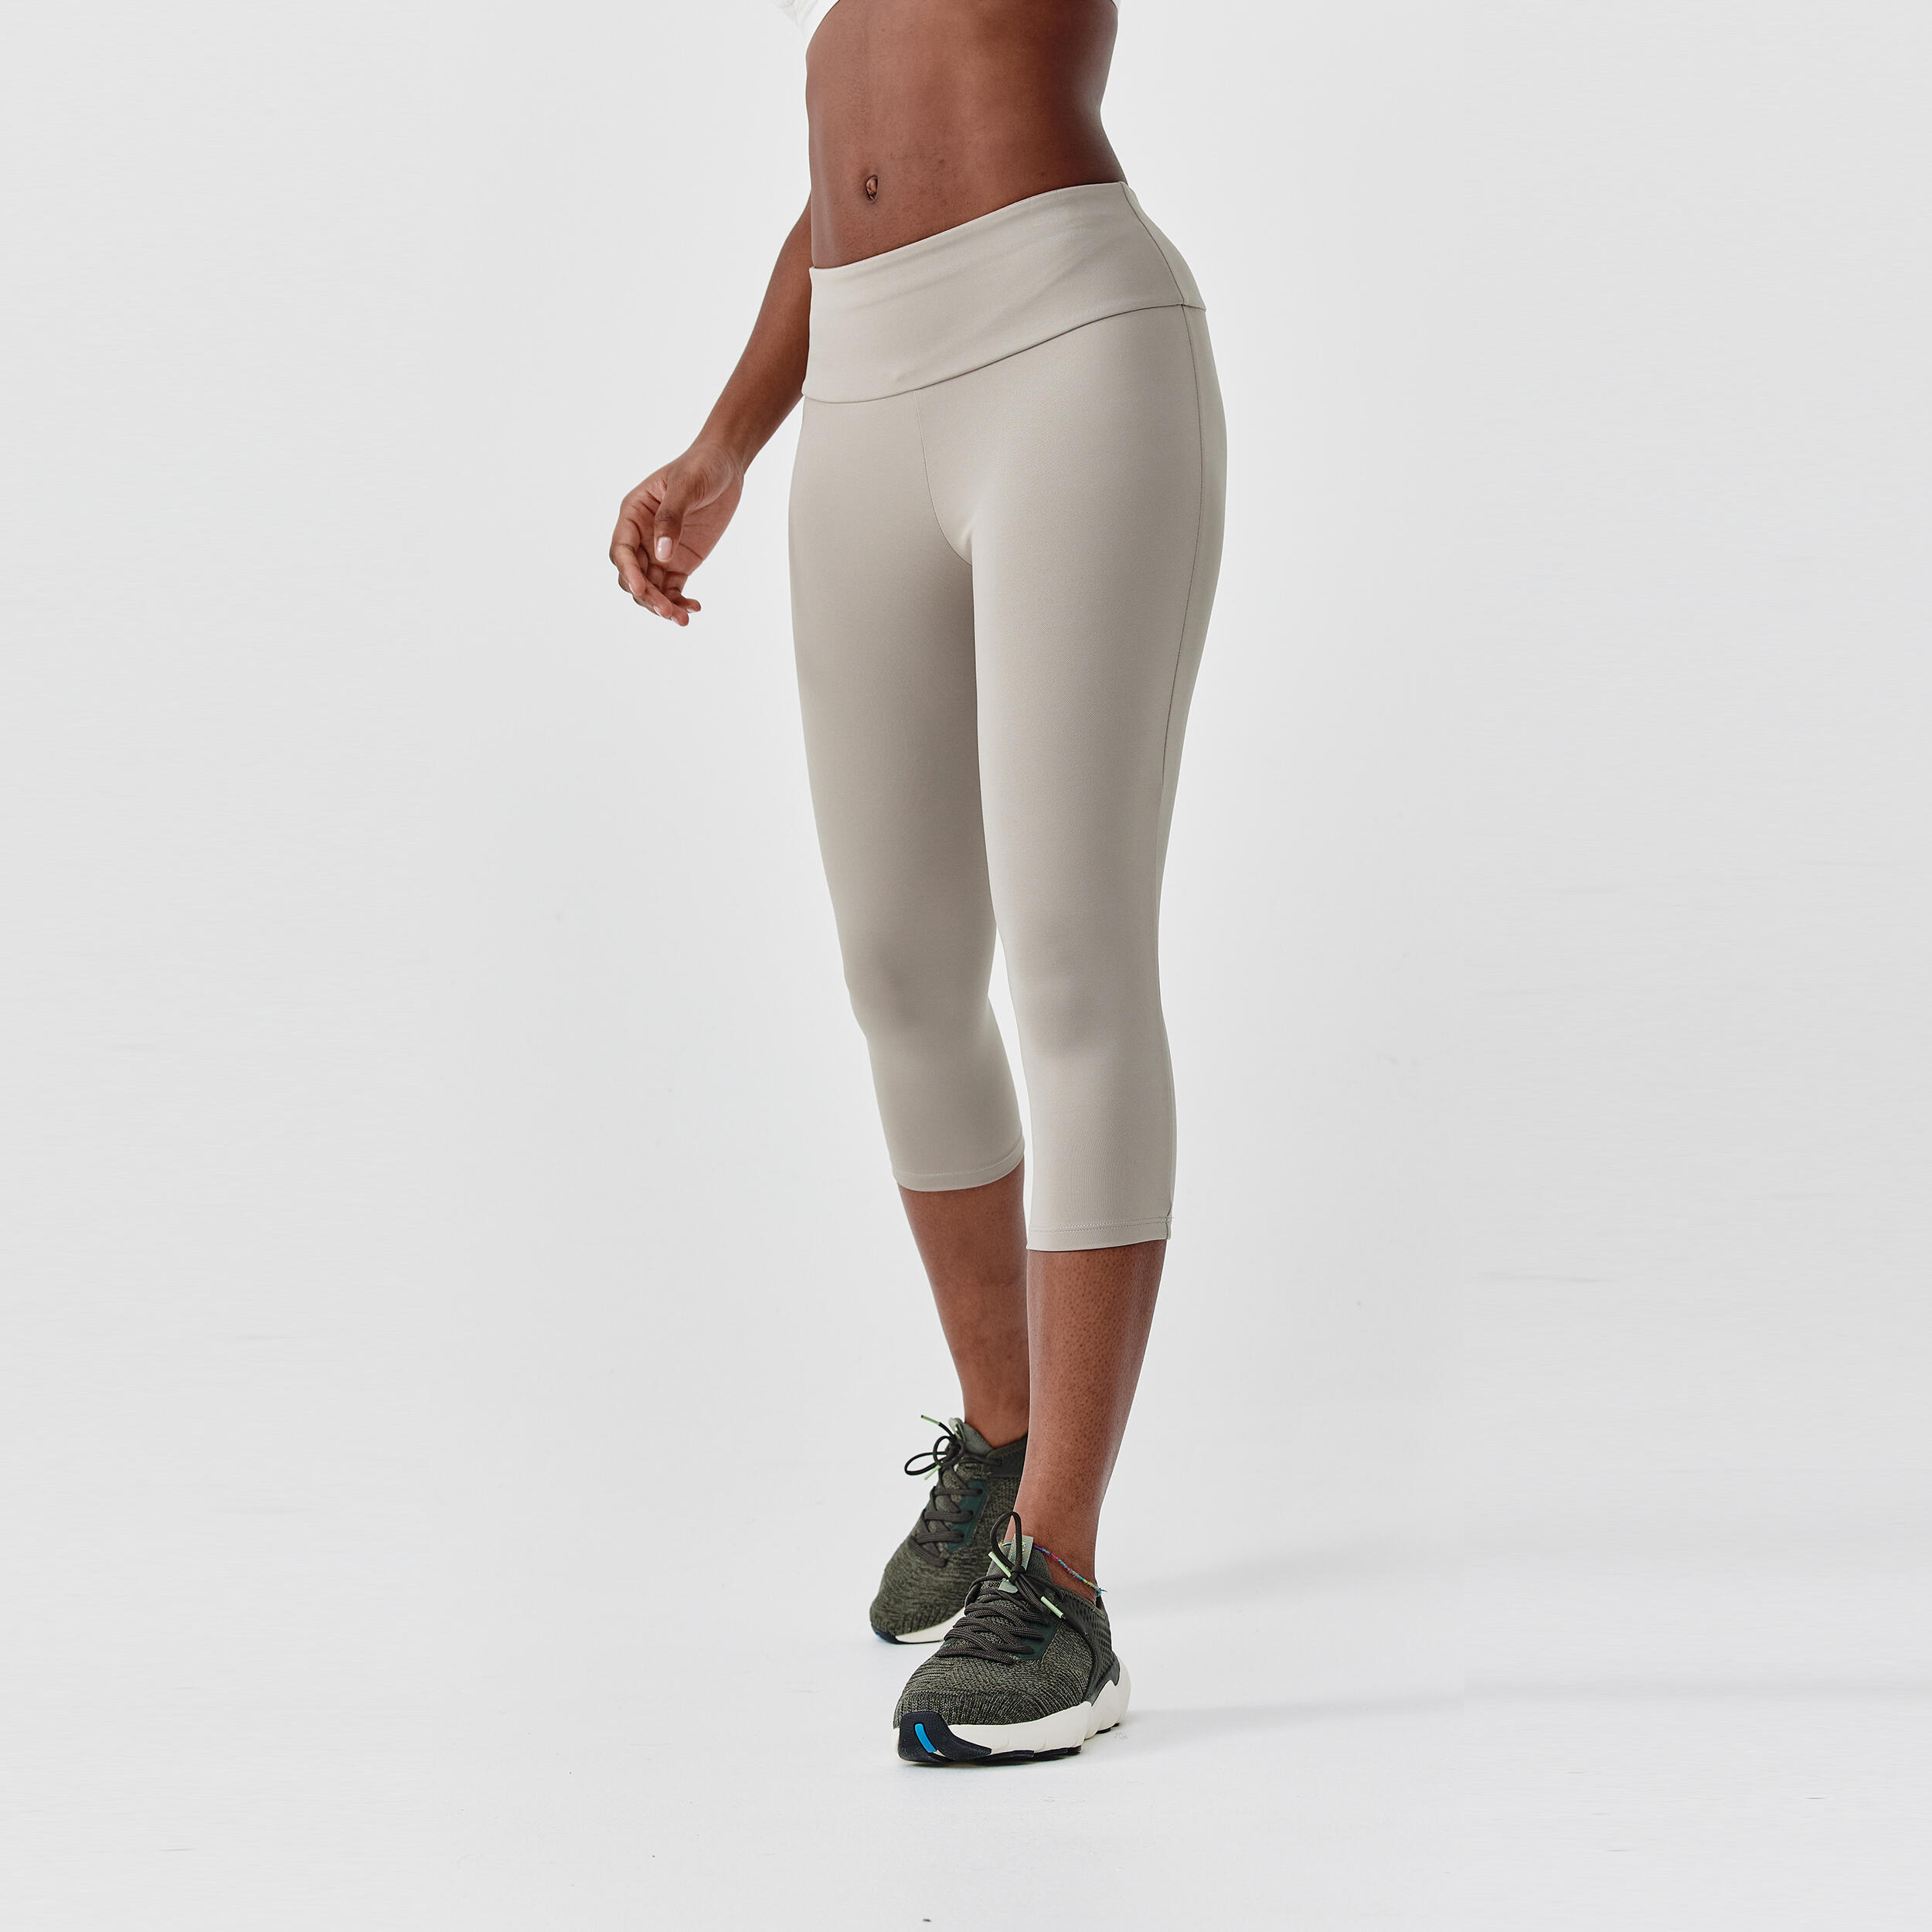 Customer Reviews: Women's short running leggings Support - black Decathlon